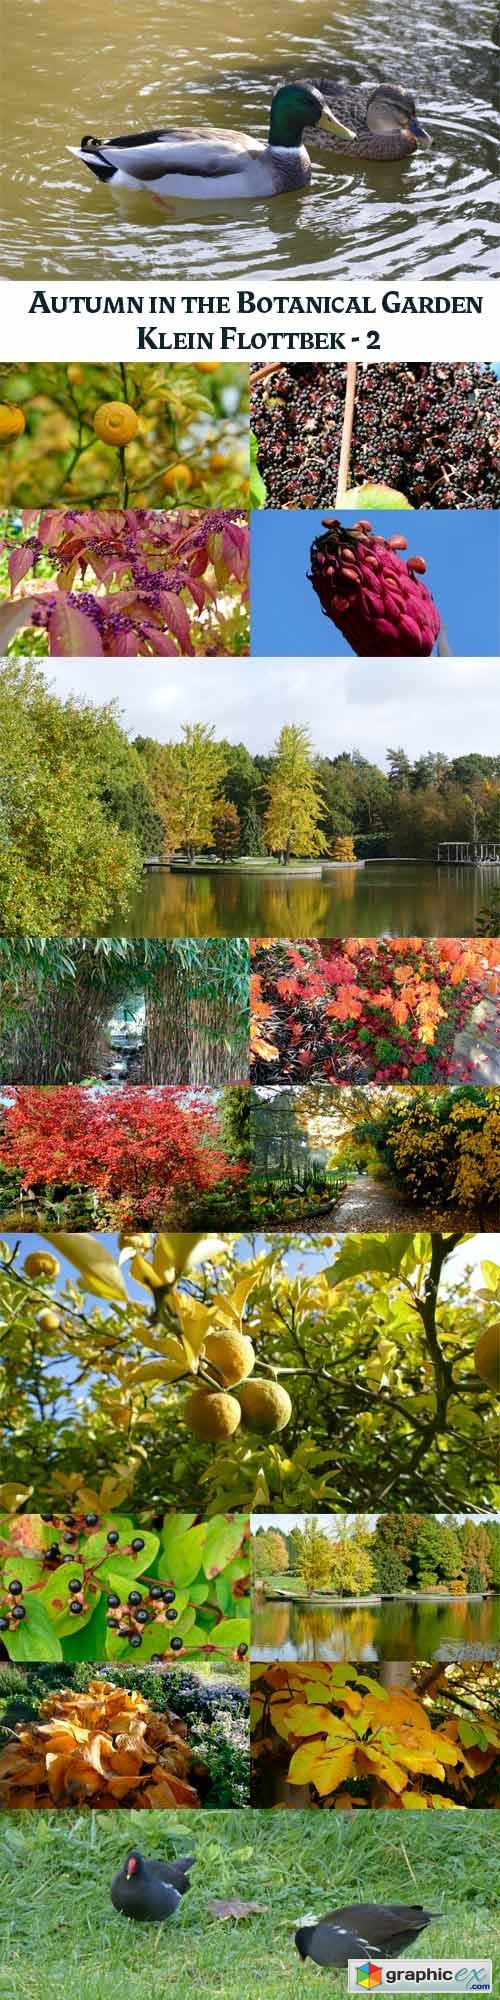 Autumn in the Botanical Garden Klein Flottbek - 2